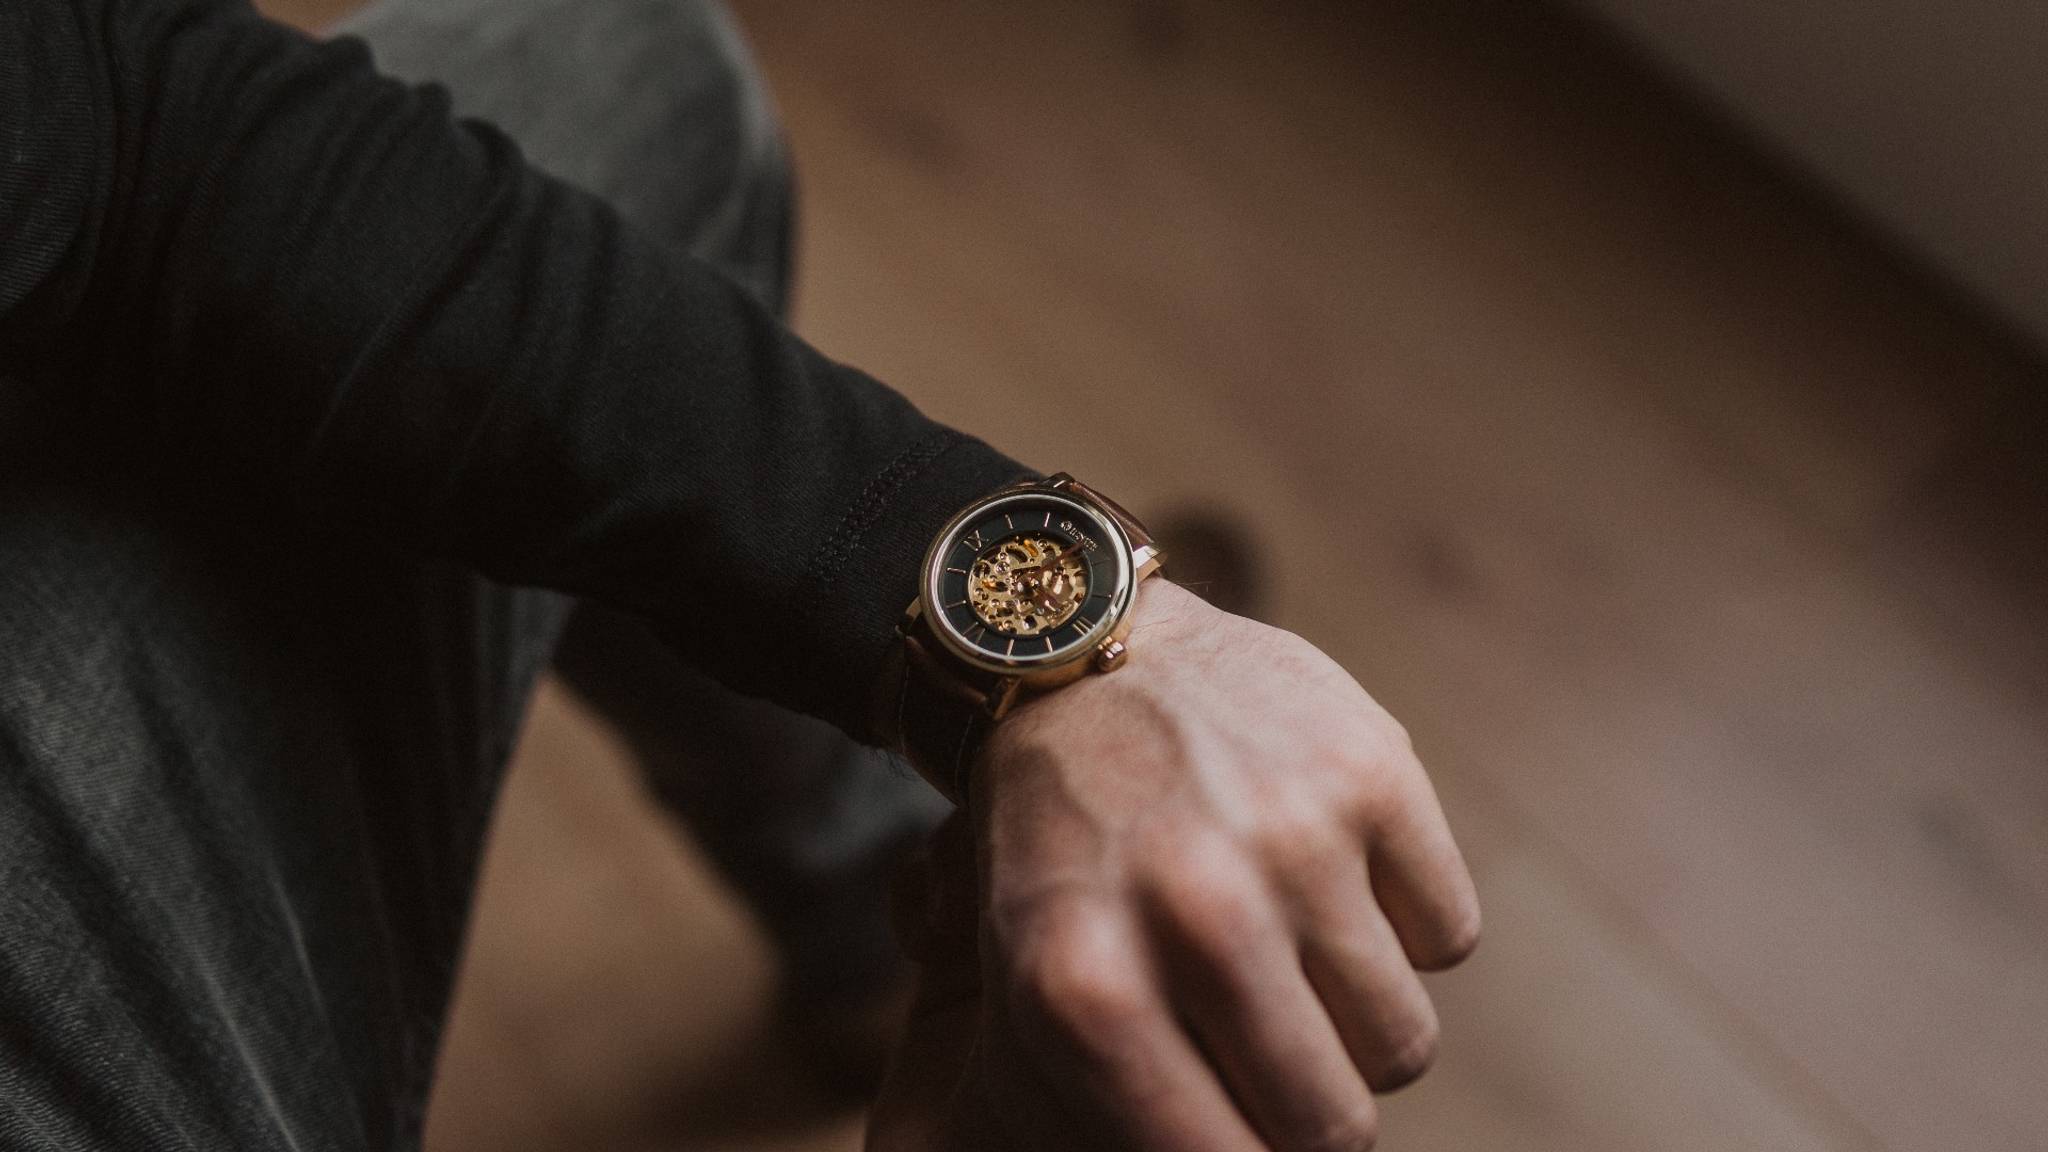 Status-seeking Gen Yers pick pre-owned luxury watches